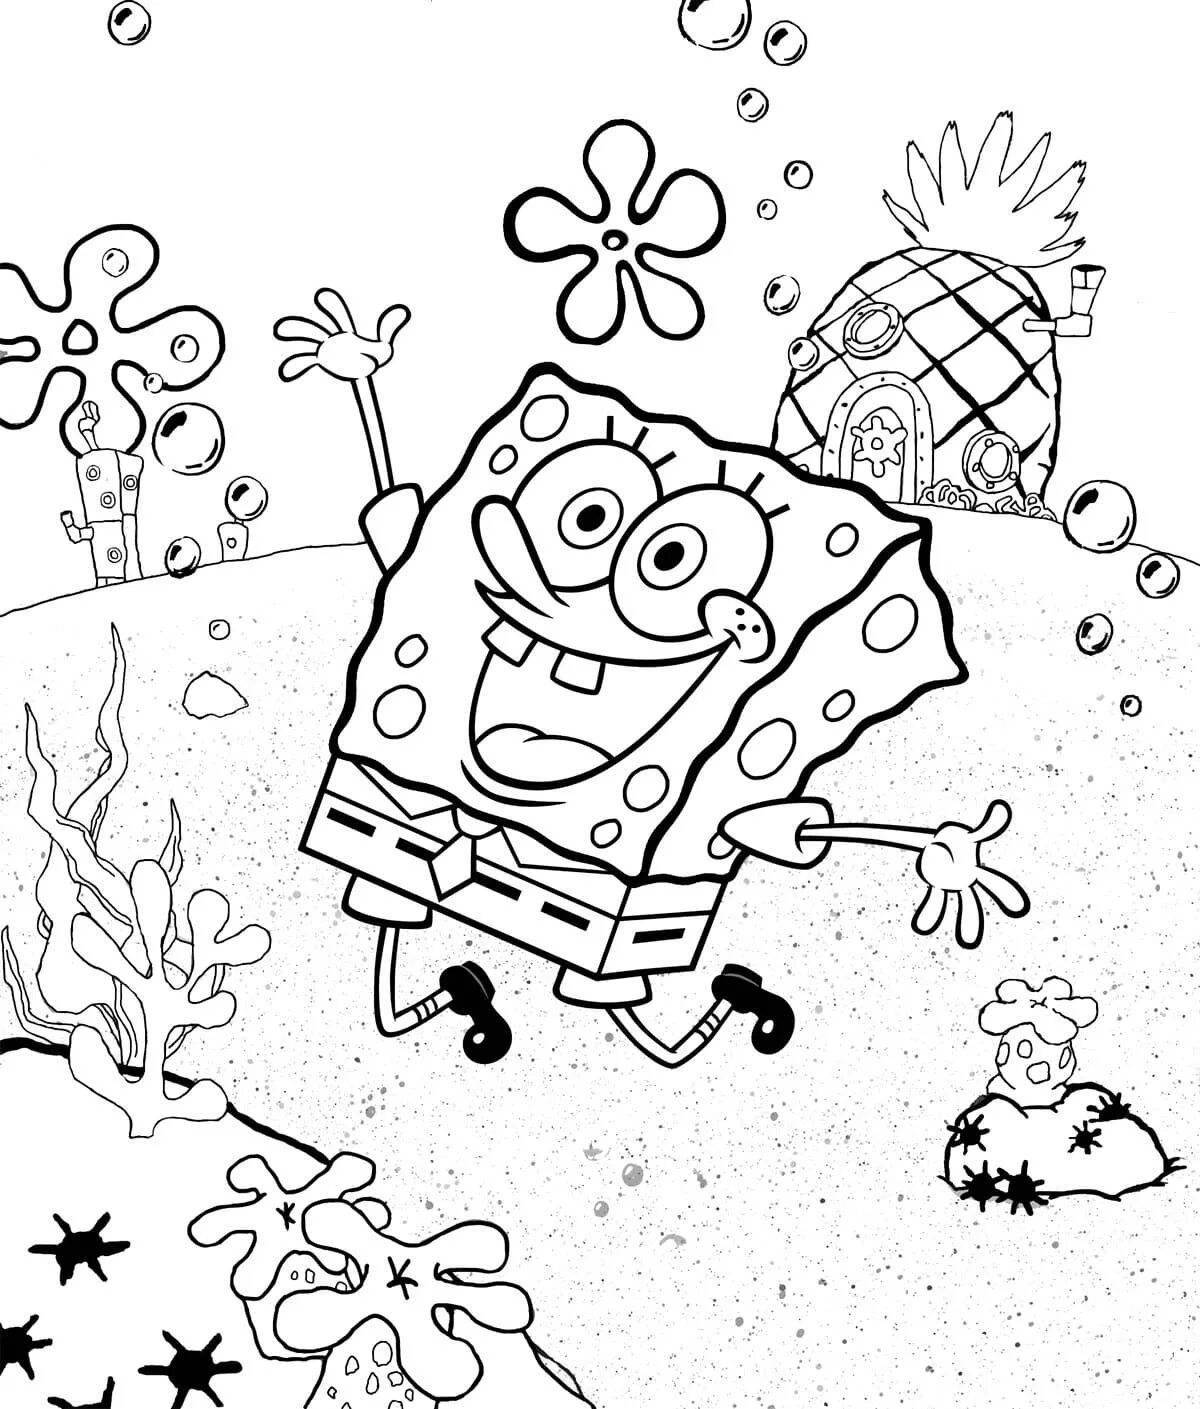 Joyful coloring spongebob drawing